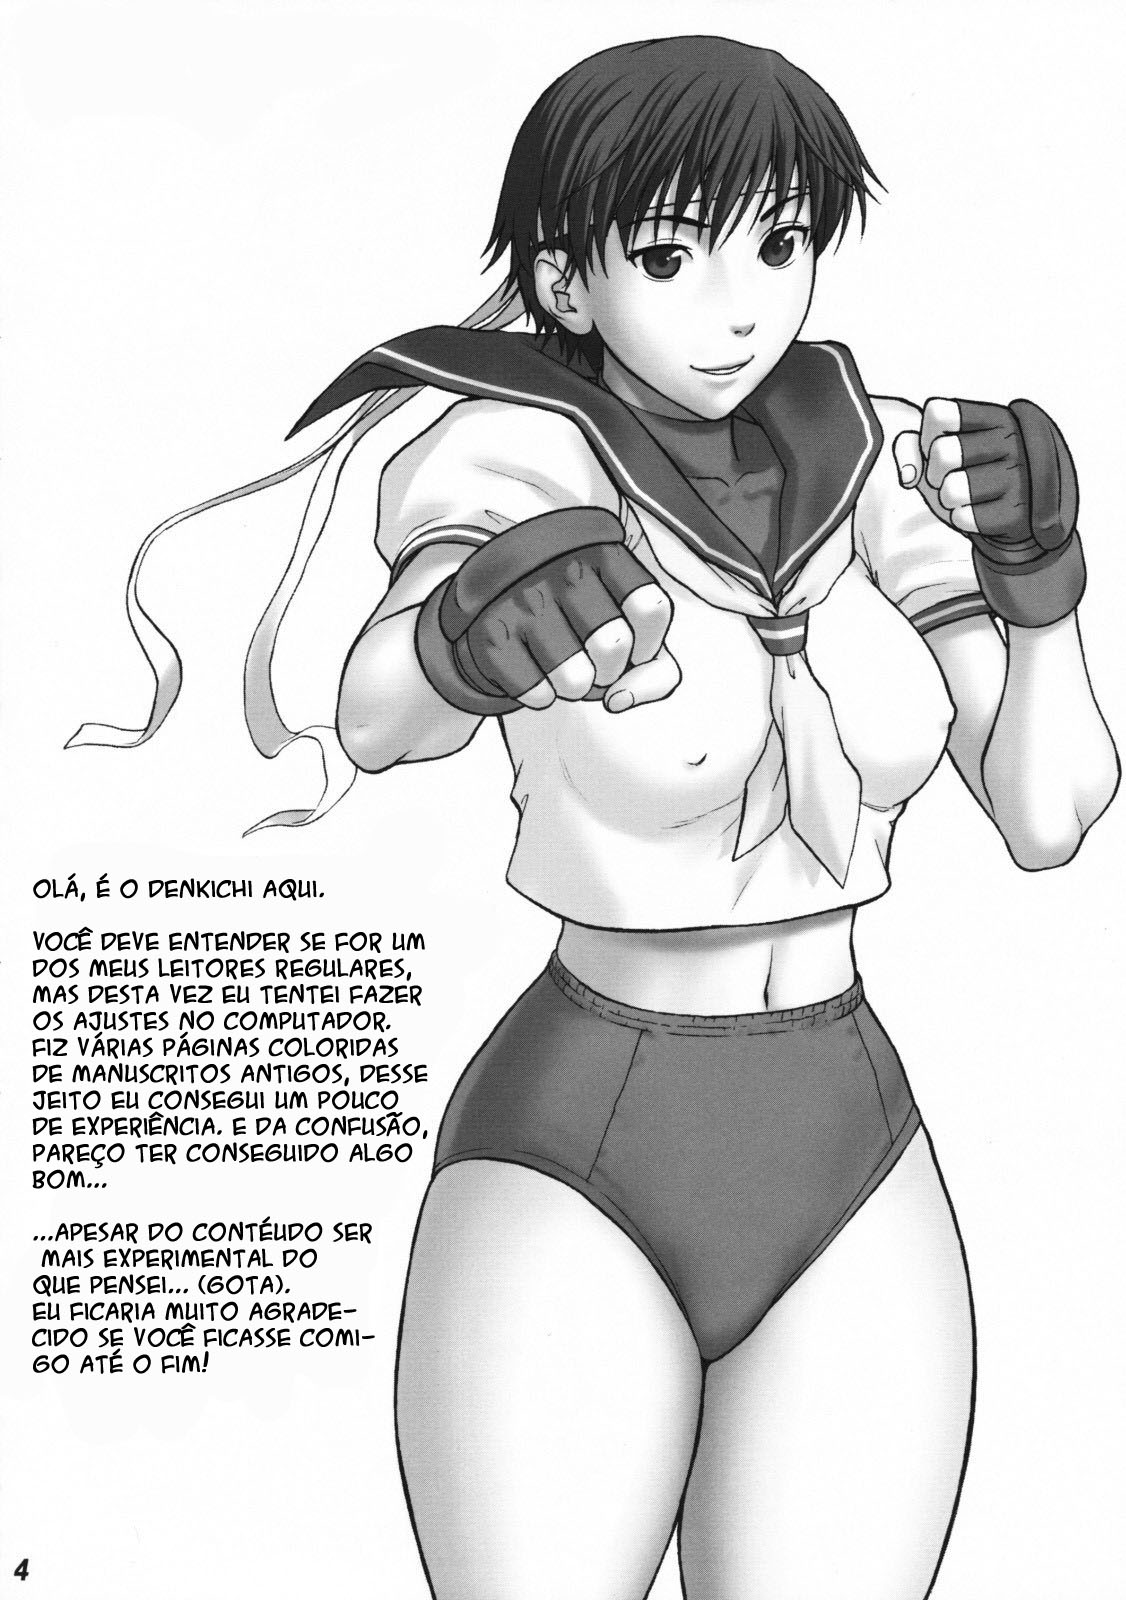 Ryu o admirador de bundas - Foto 2